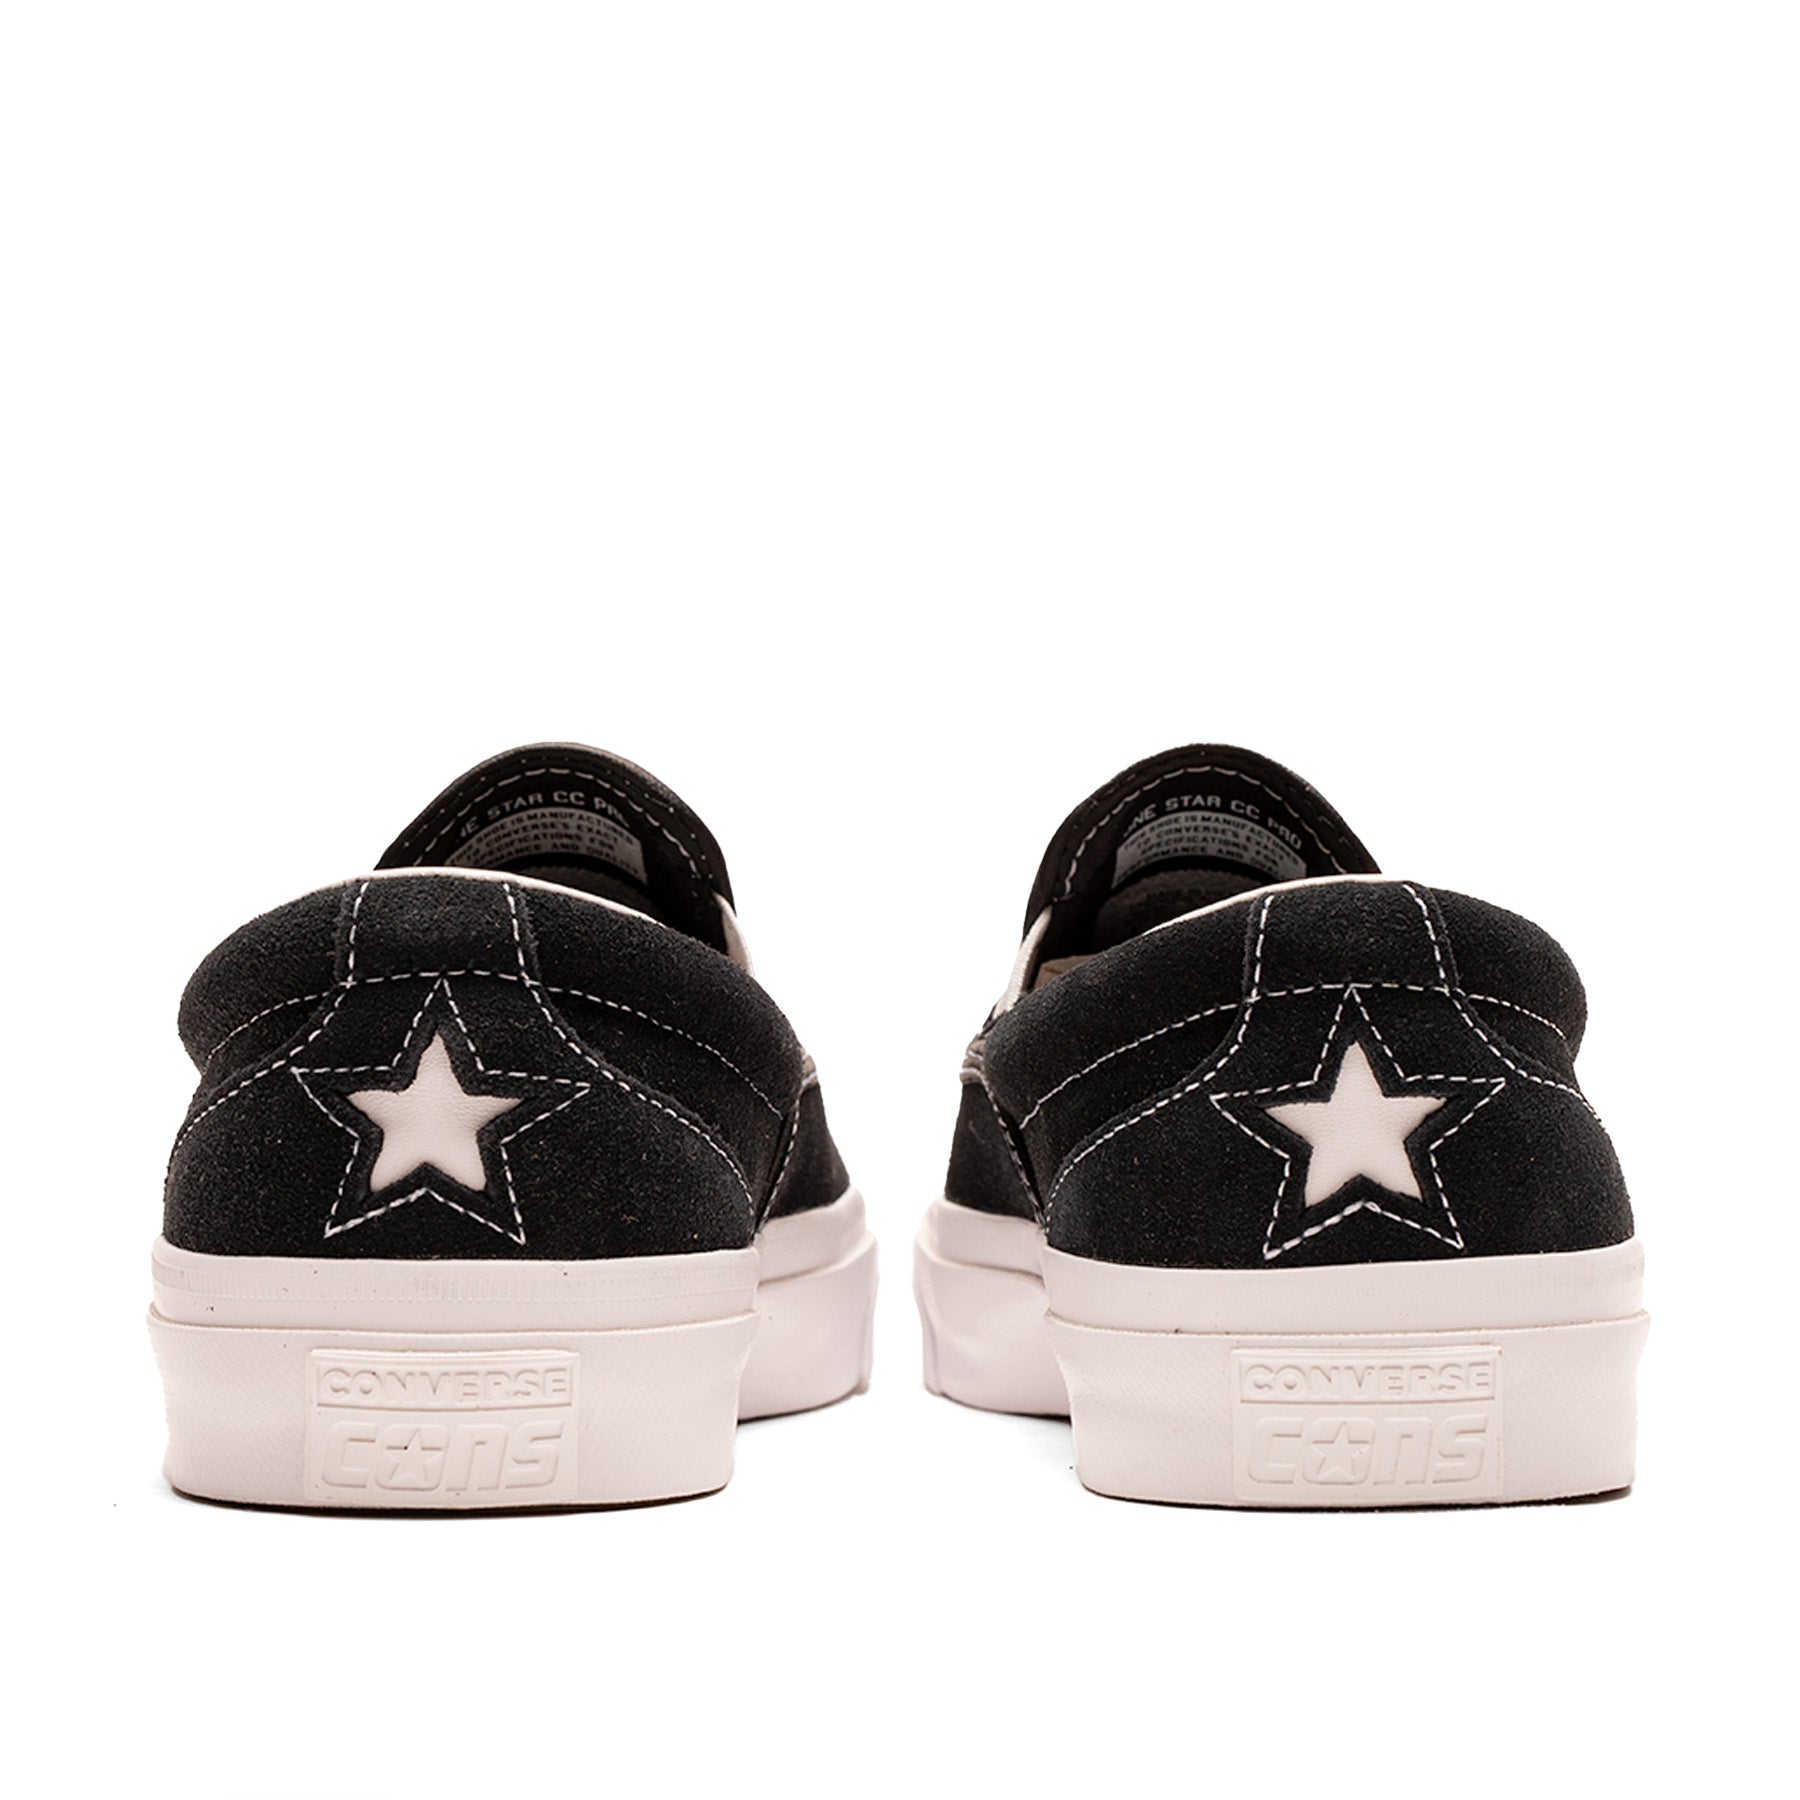 Converse - One Star CC Slip Pro - Black/White/White